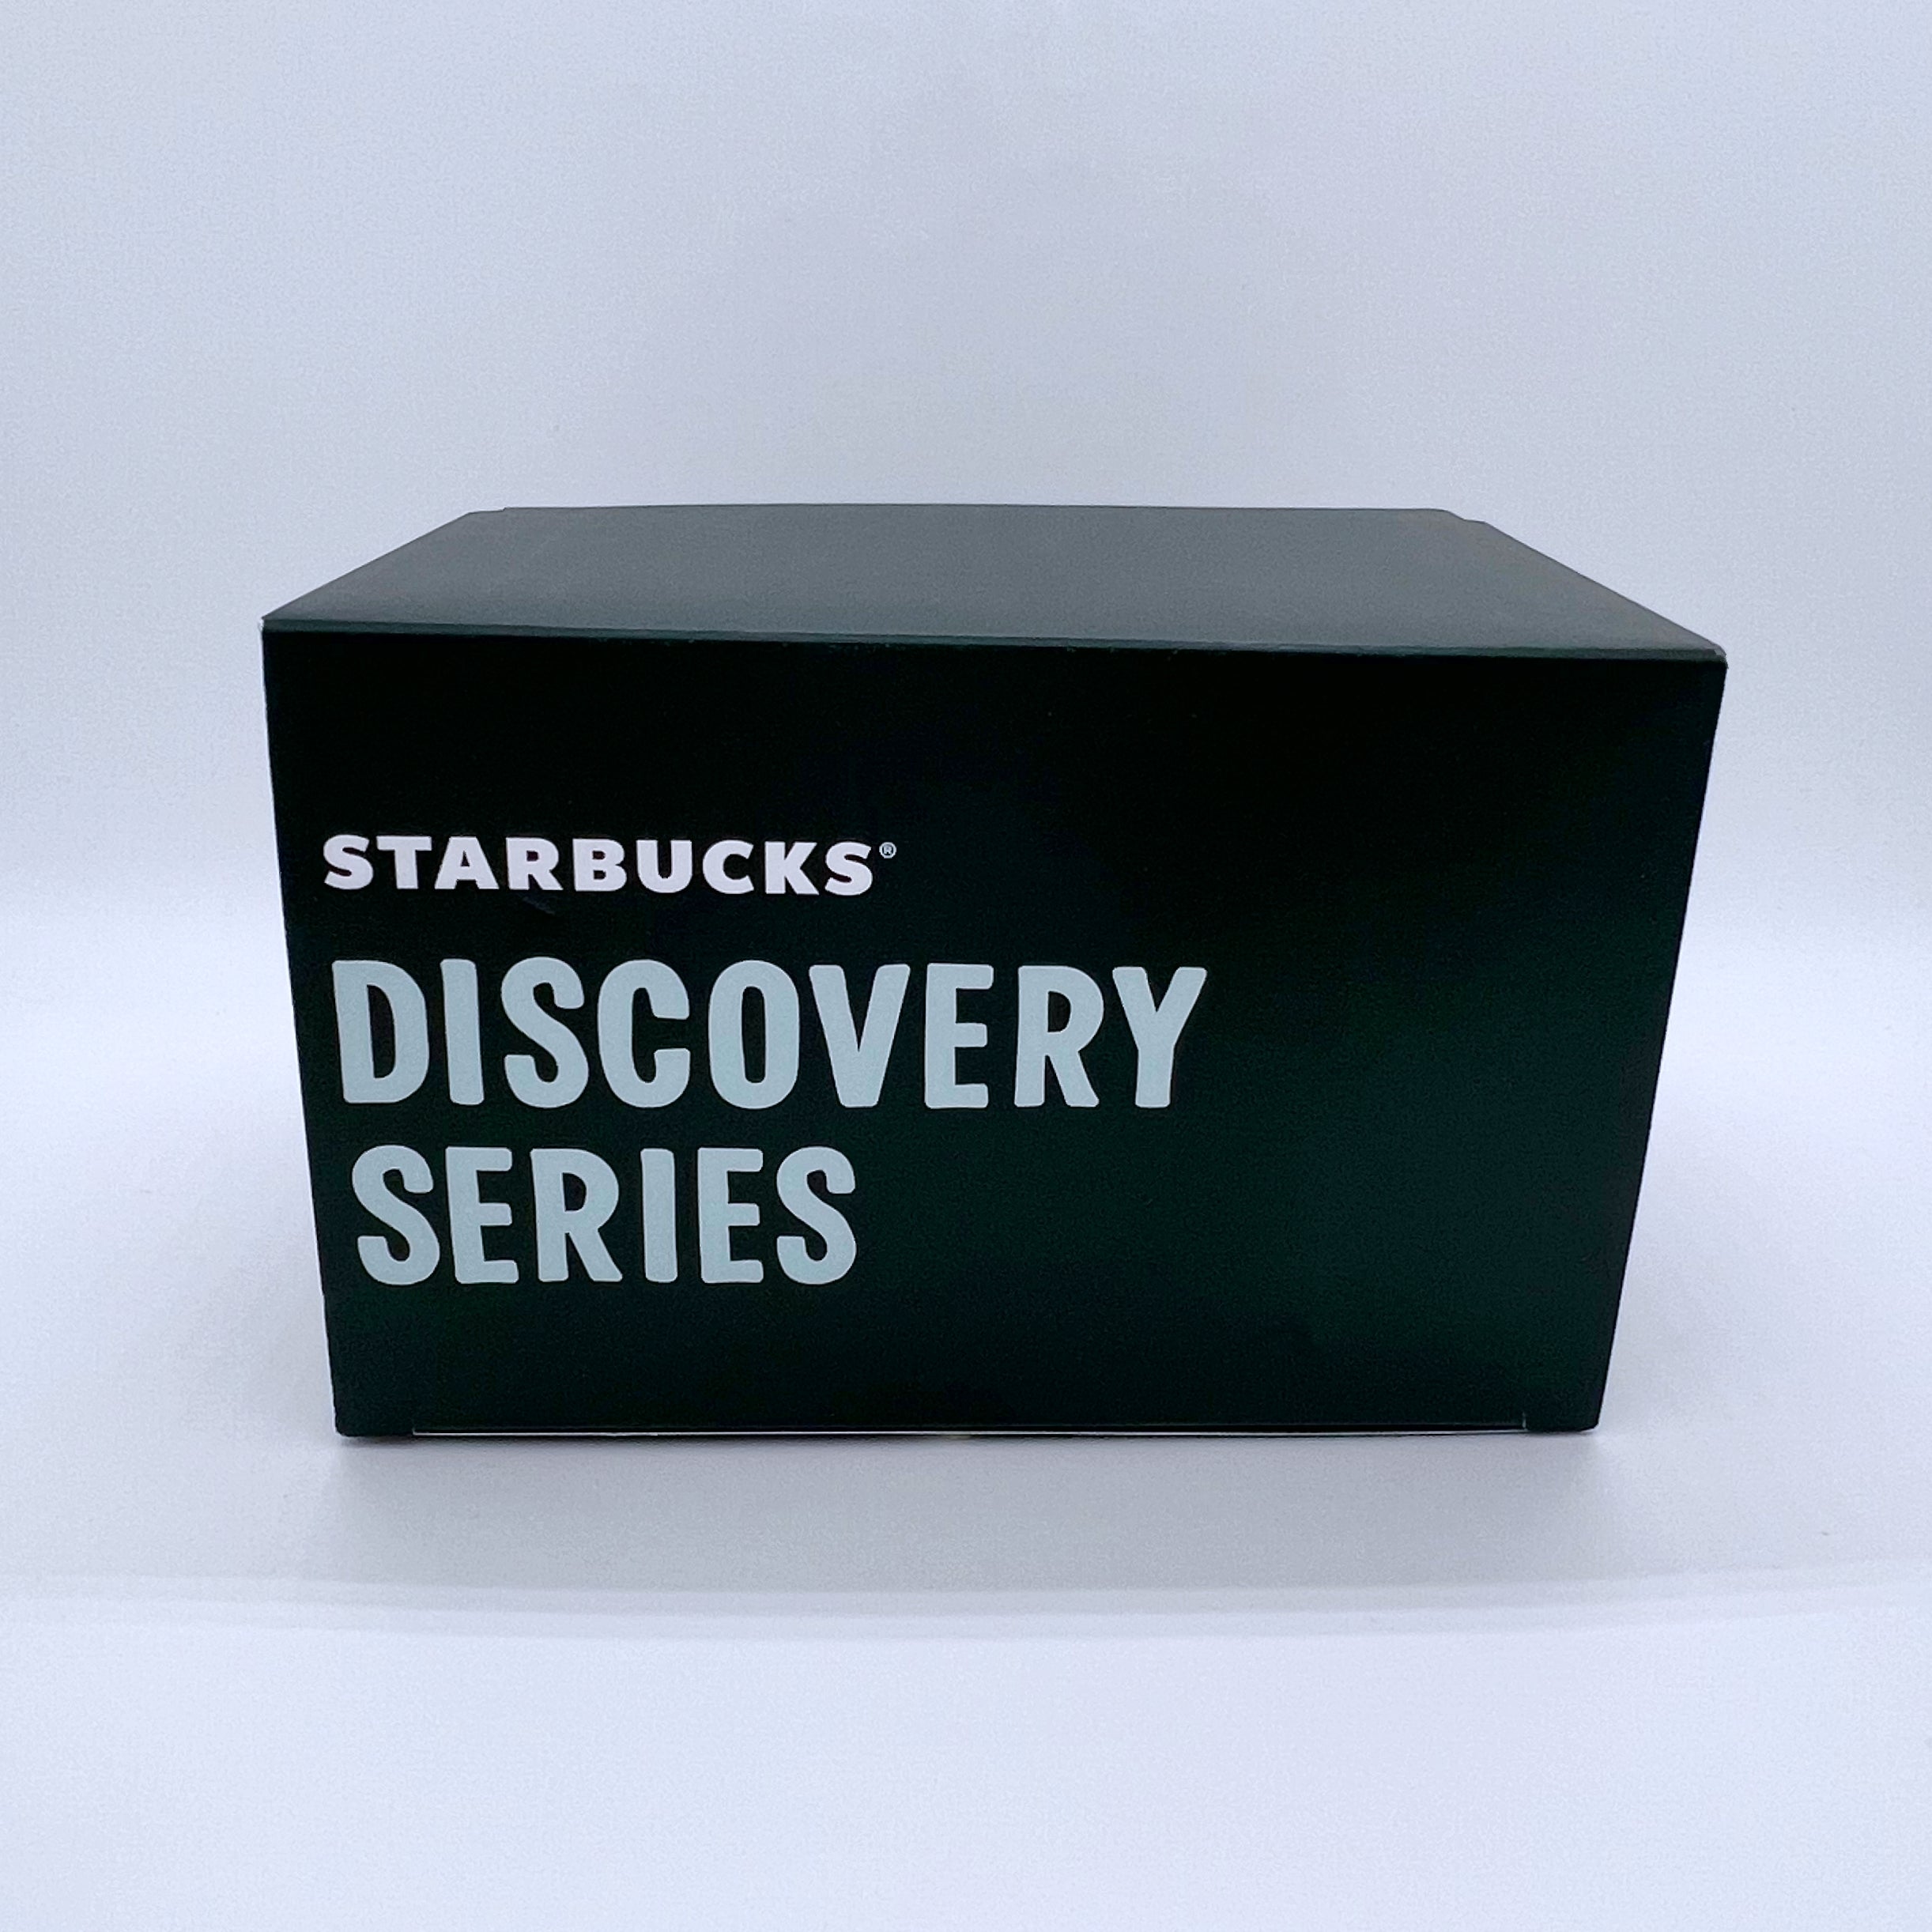 Oregon City Kaffee Tasse Discovery Series